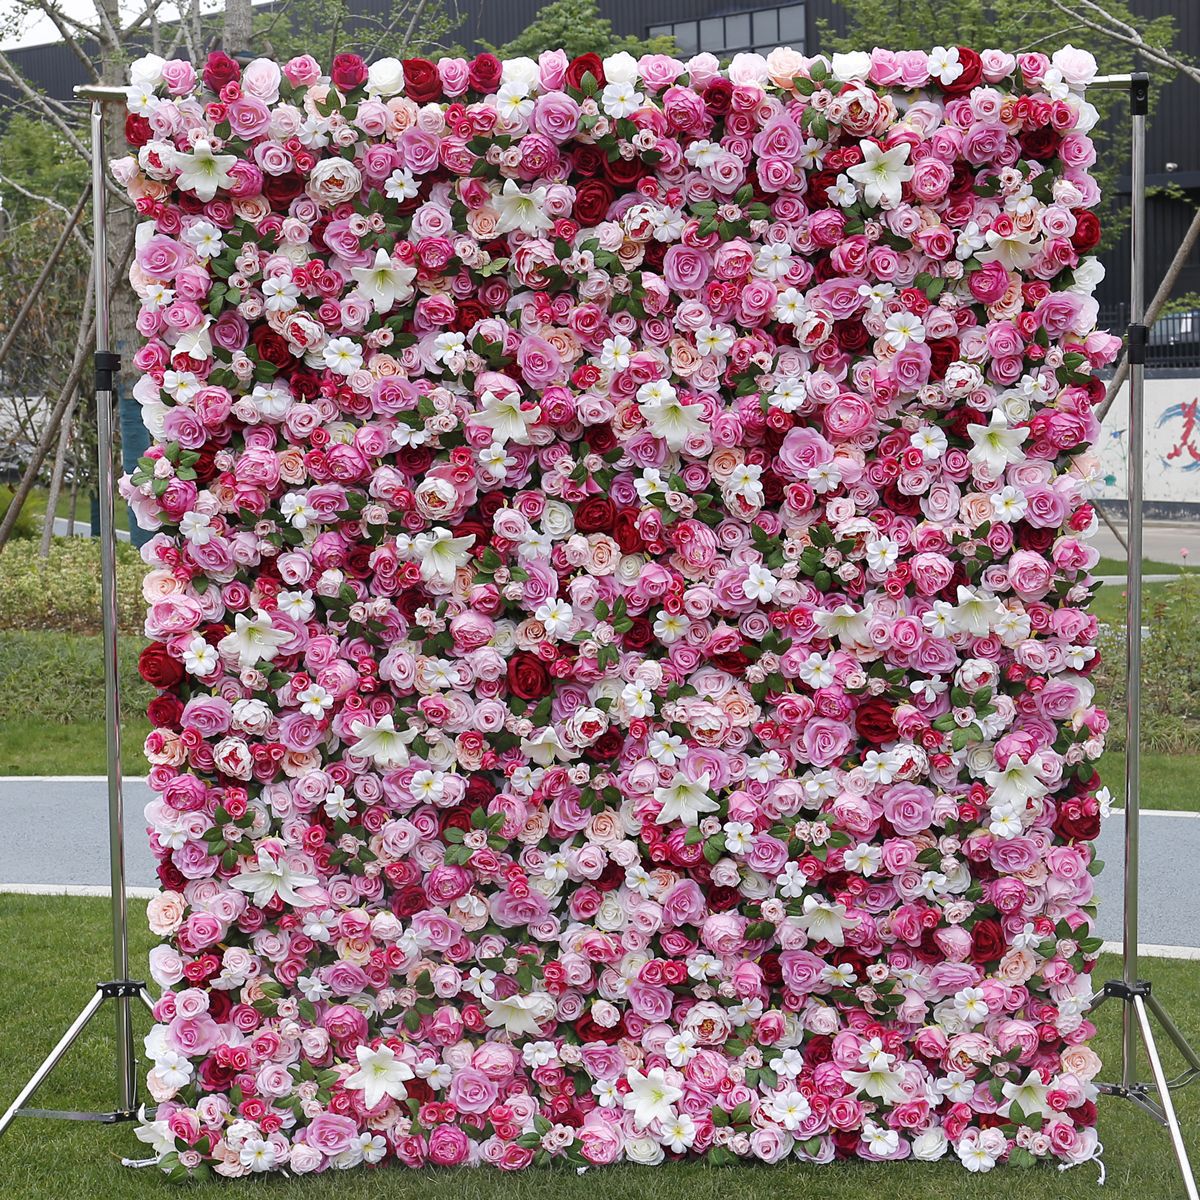 5D ŝtofo fundo simulado floro muro fono muro geedziĝo dekoracio subĉiela geedziĝo naskiĝtaga festo aranĝo